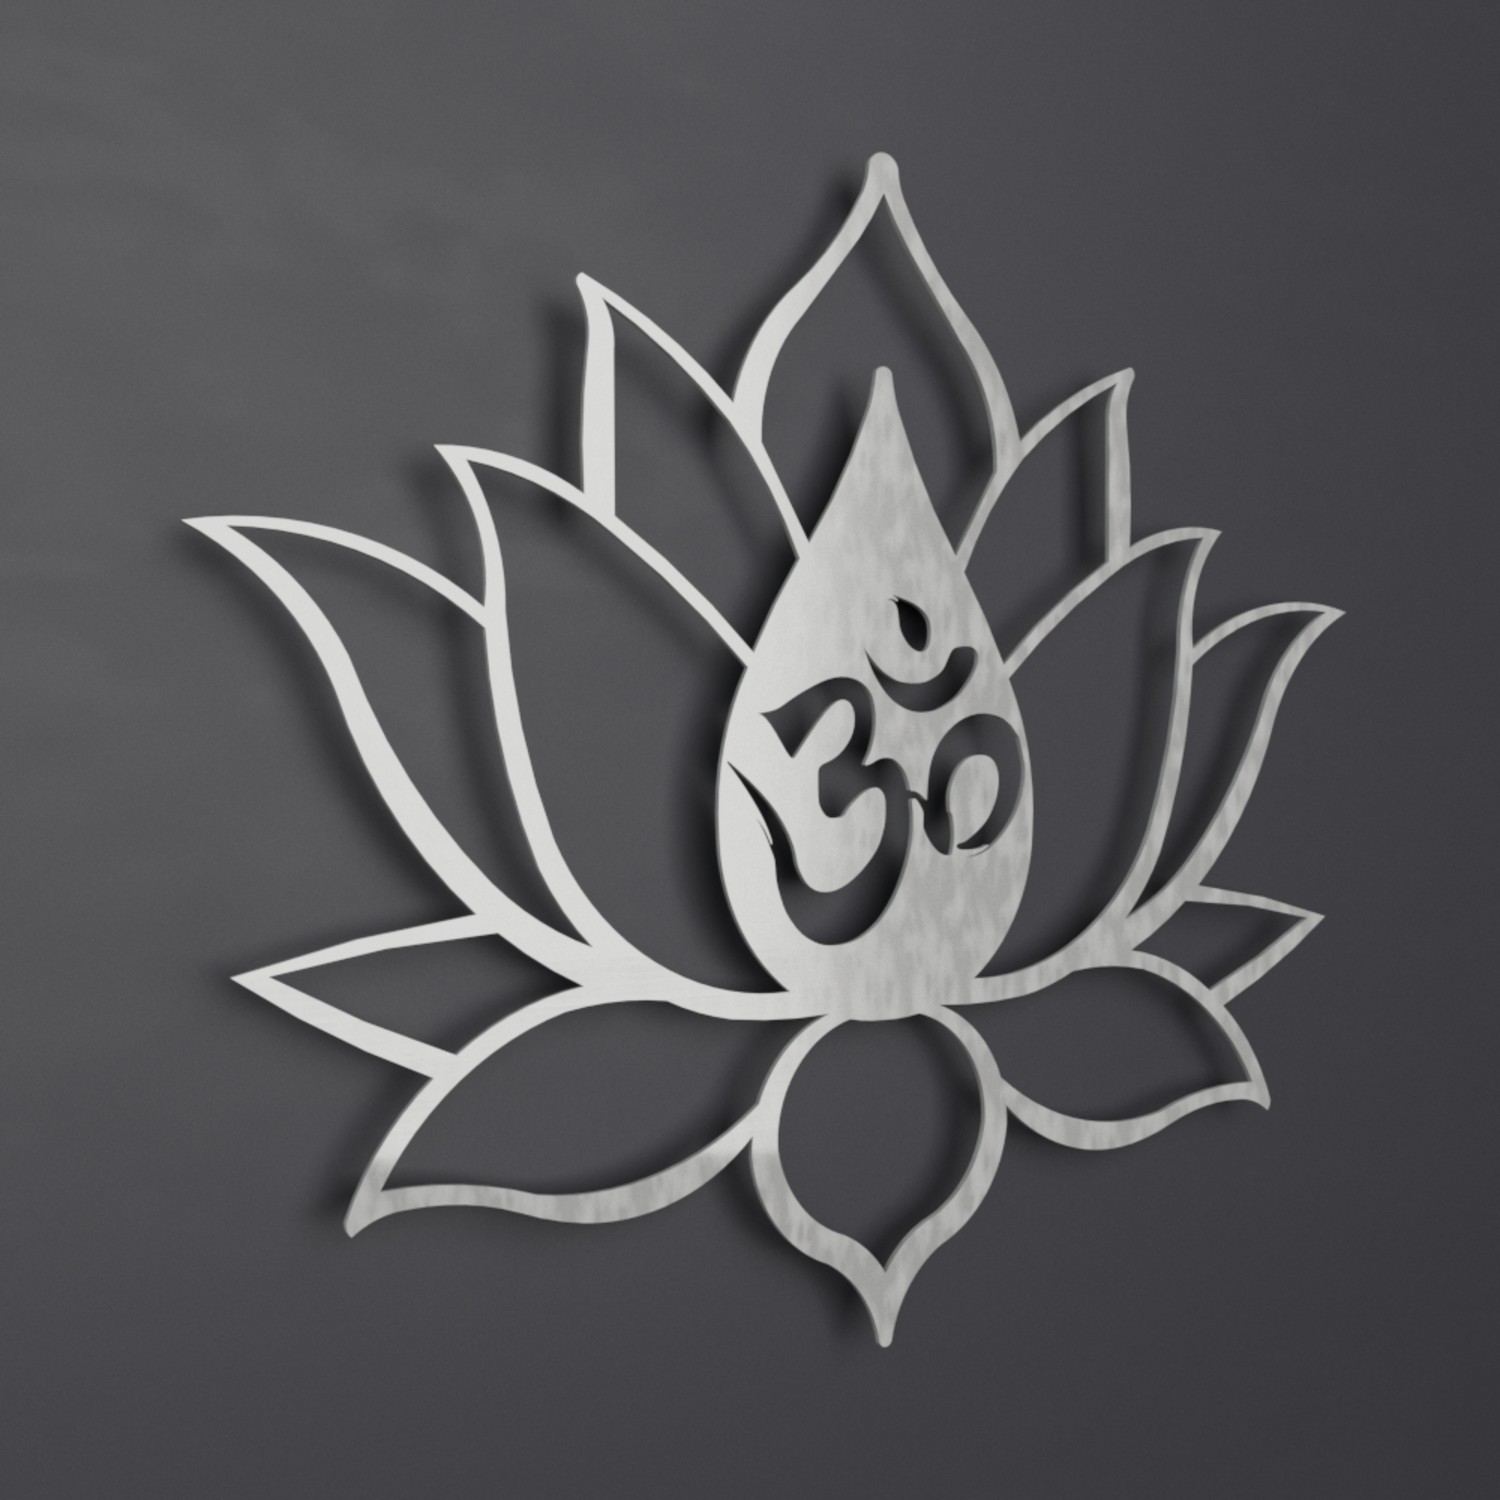 om-symbol-lotus-flower-3d-metal-wall-art-36-w-x-31-h-x-0-25-d-arte